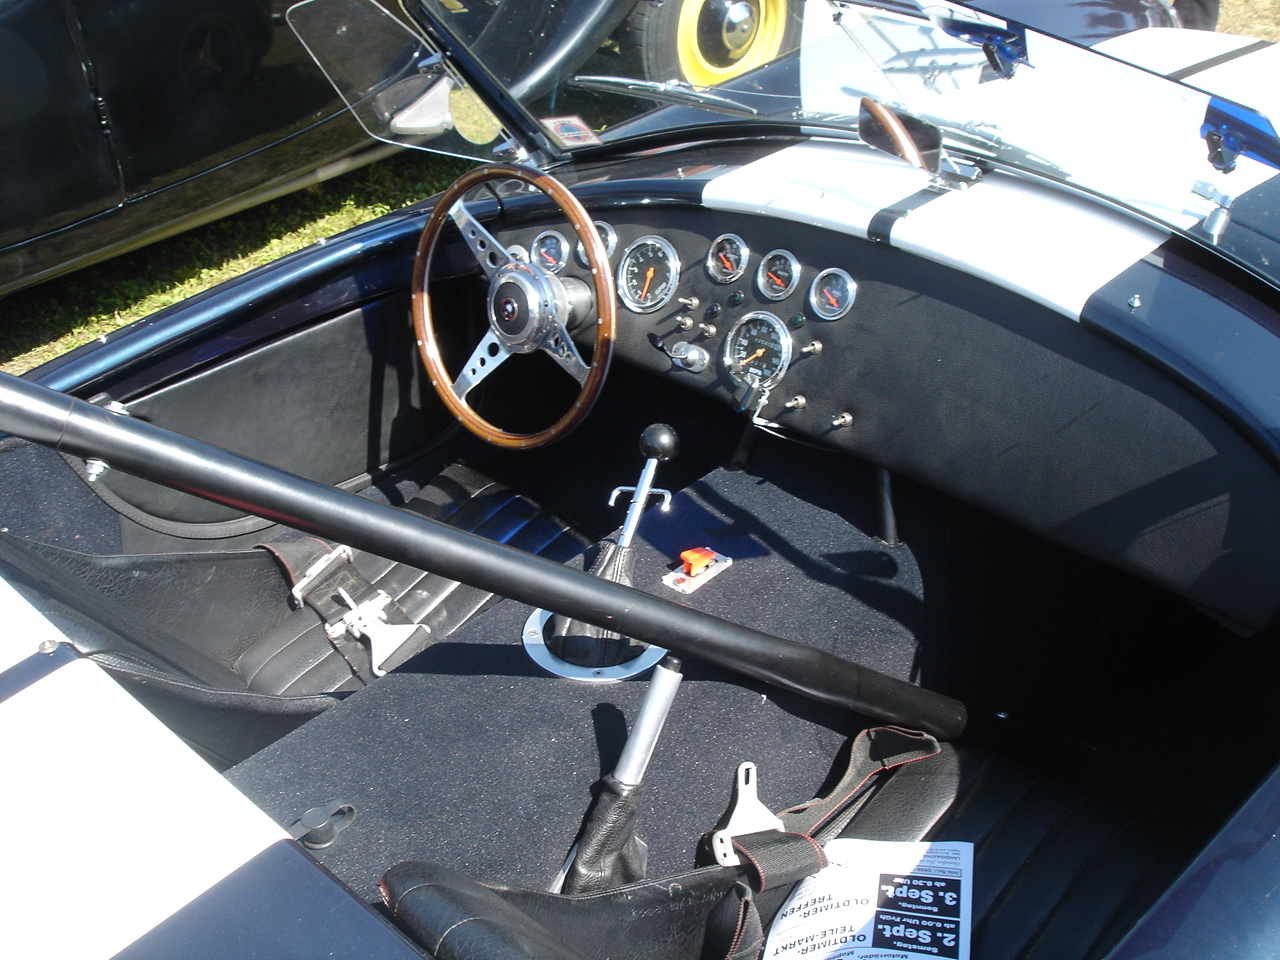 File:Shelby Cobra inside.jpg - Wikimedia Commons